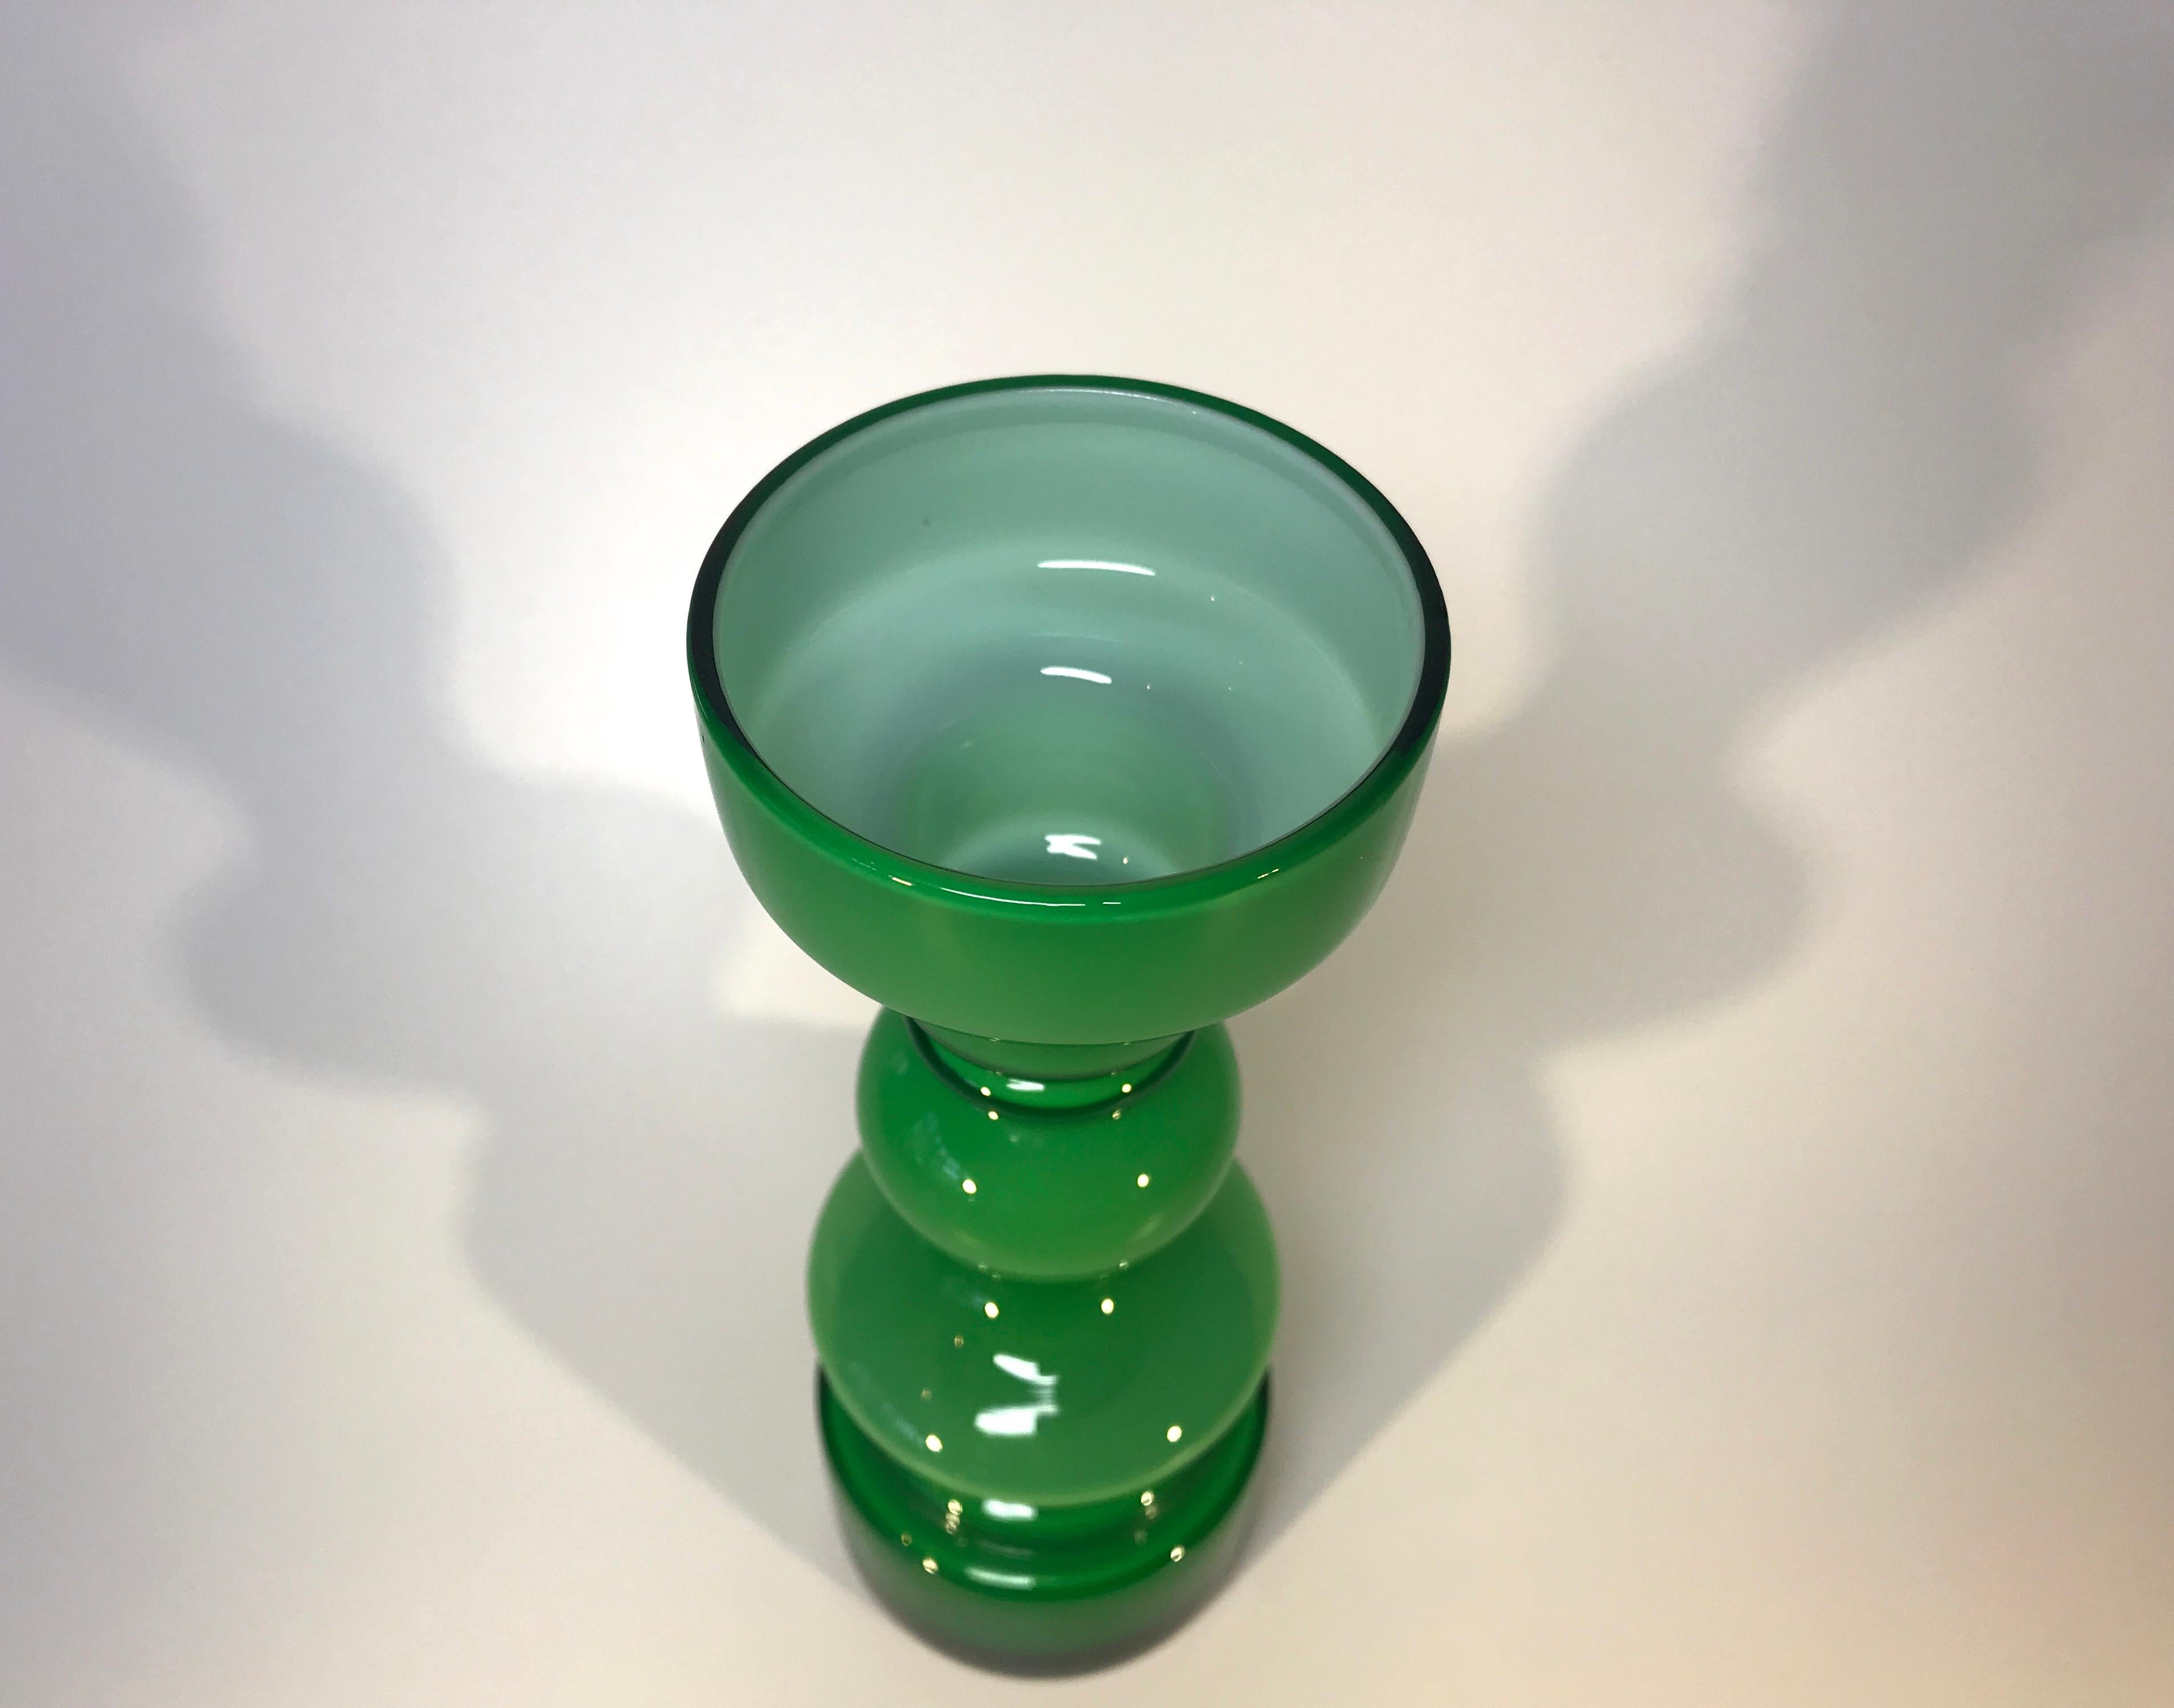 lindshammar glass vase